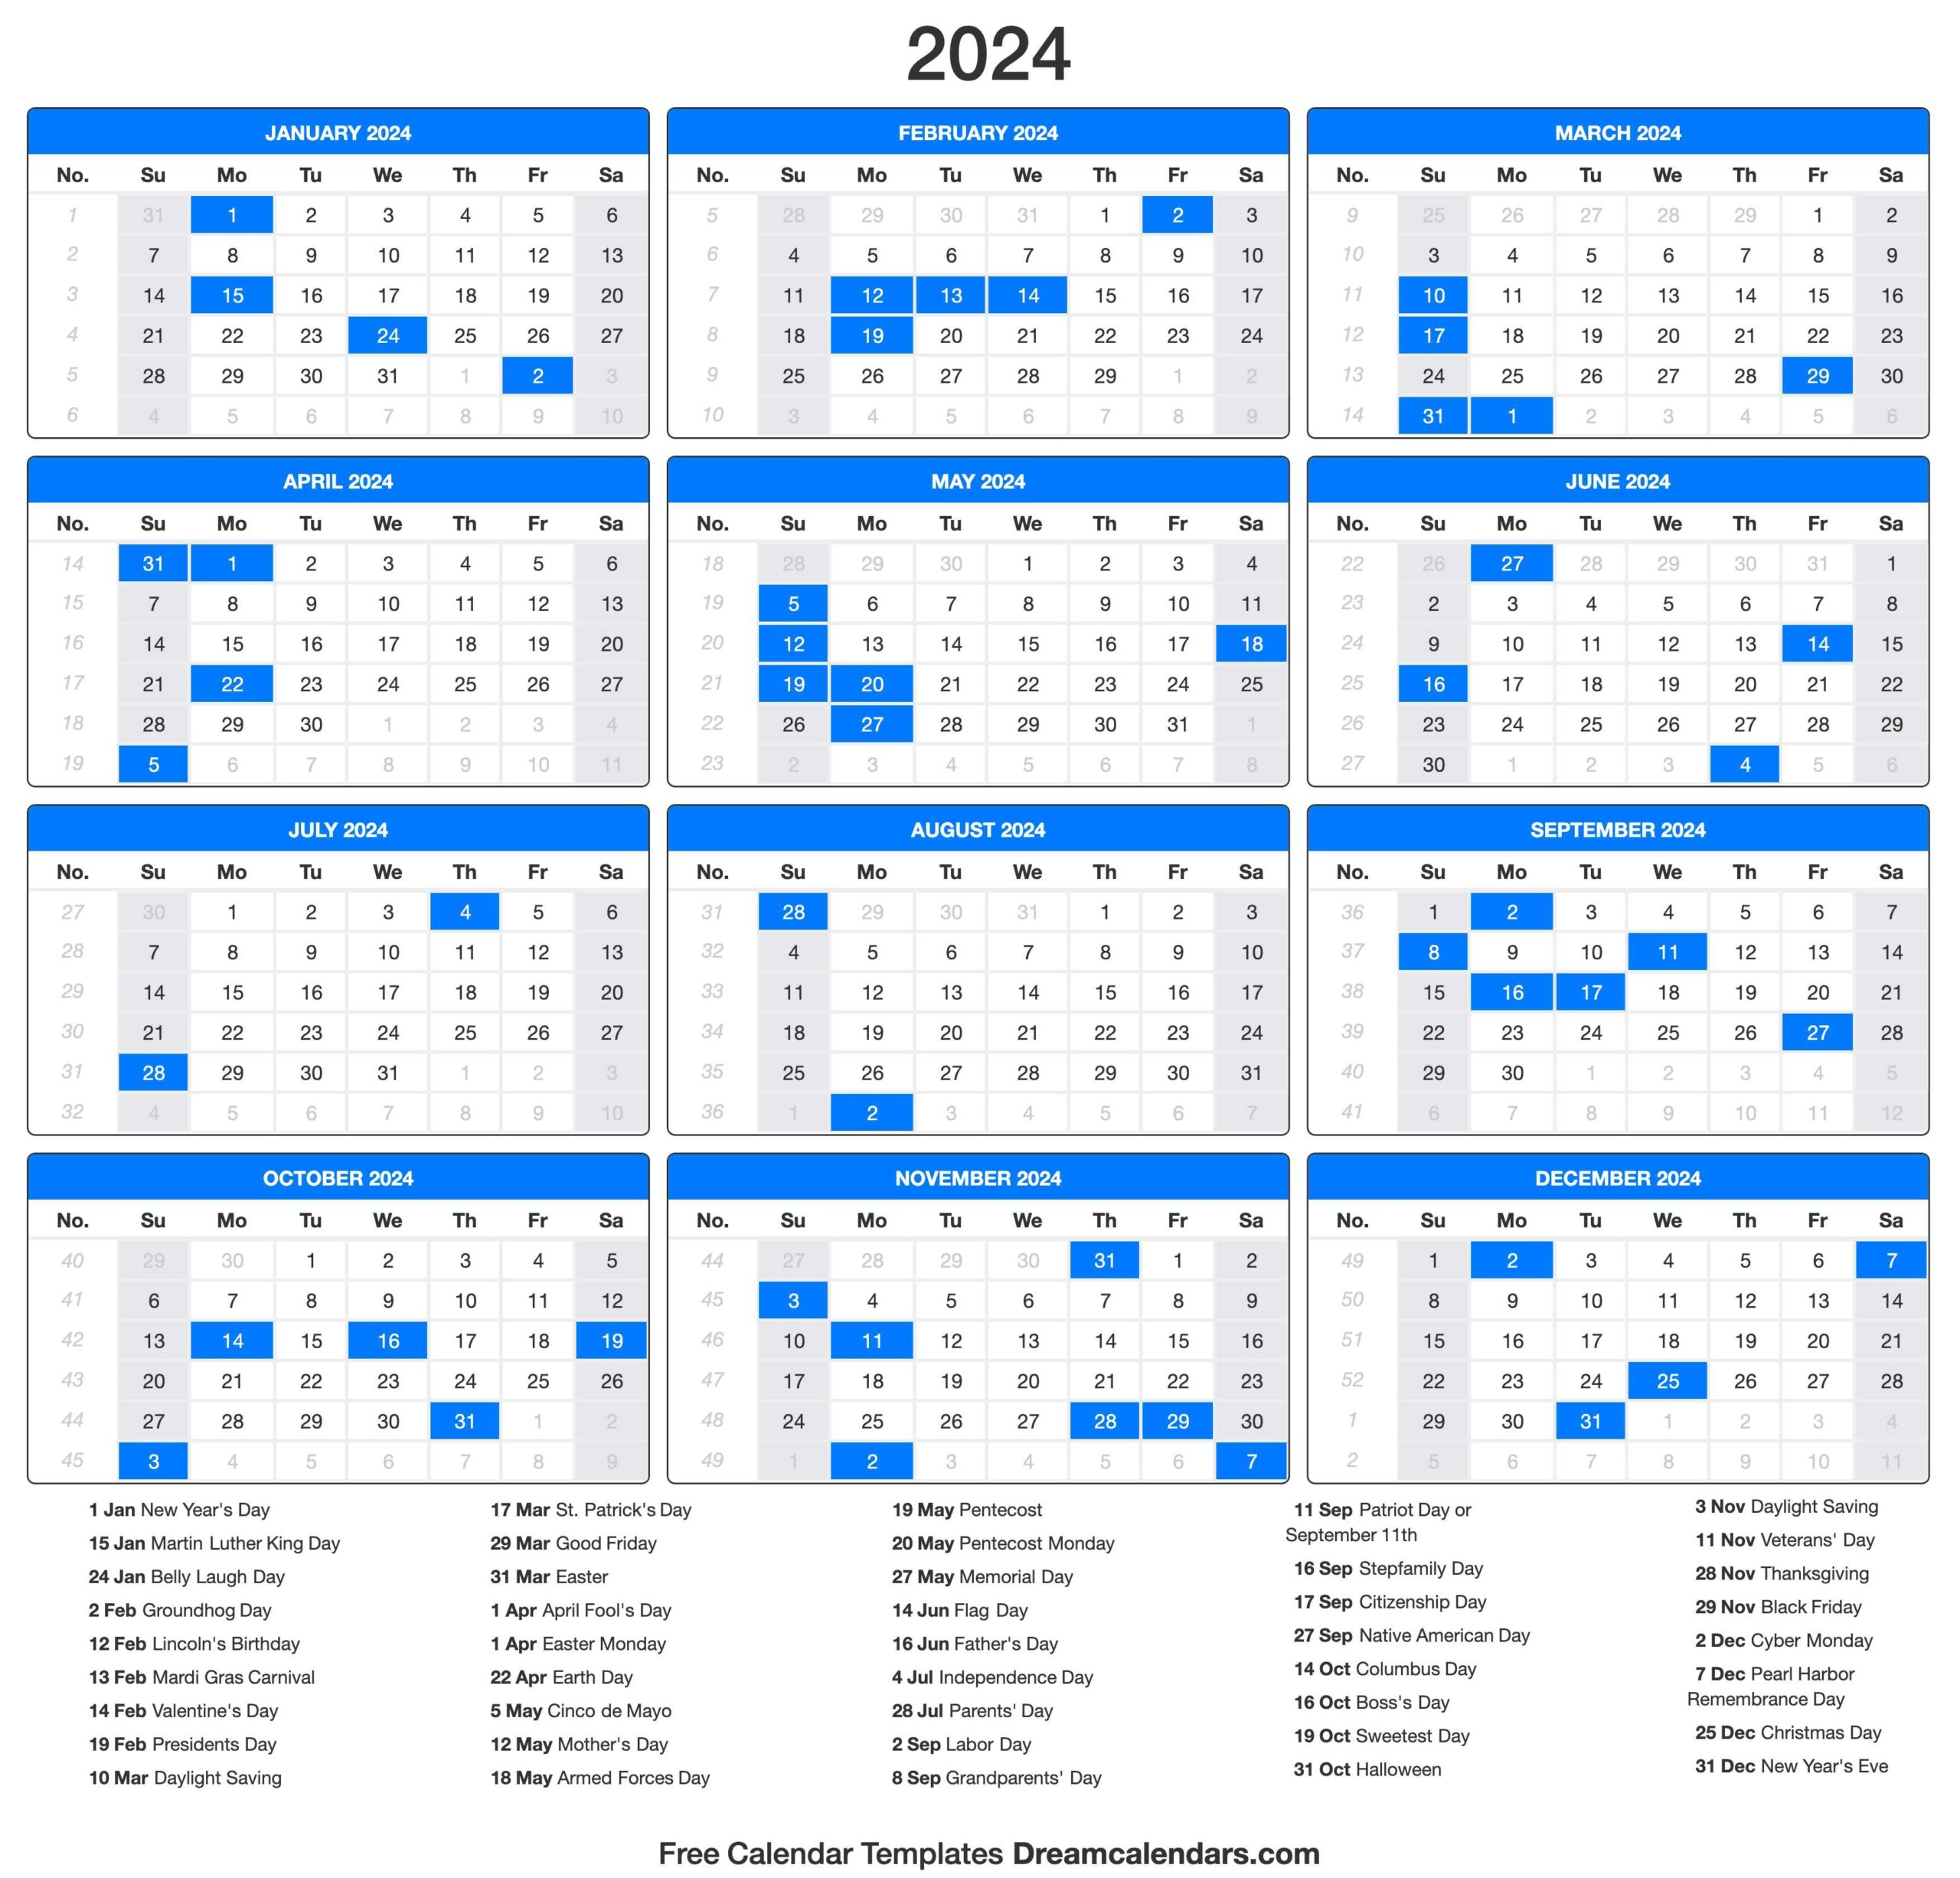 2024 Calendar - Free Printable 12 Month Calendar 2024 With Holidays